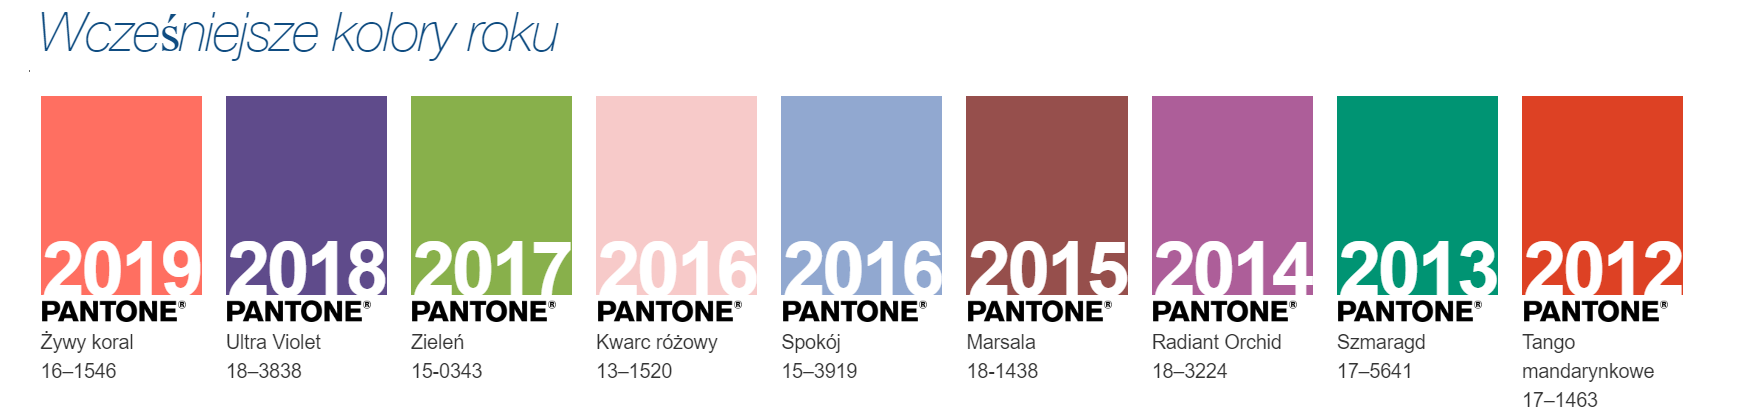 Kolor Roku Pantone 2012-2019